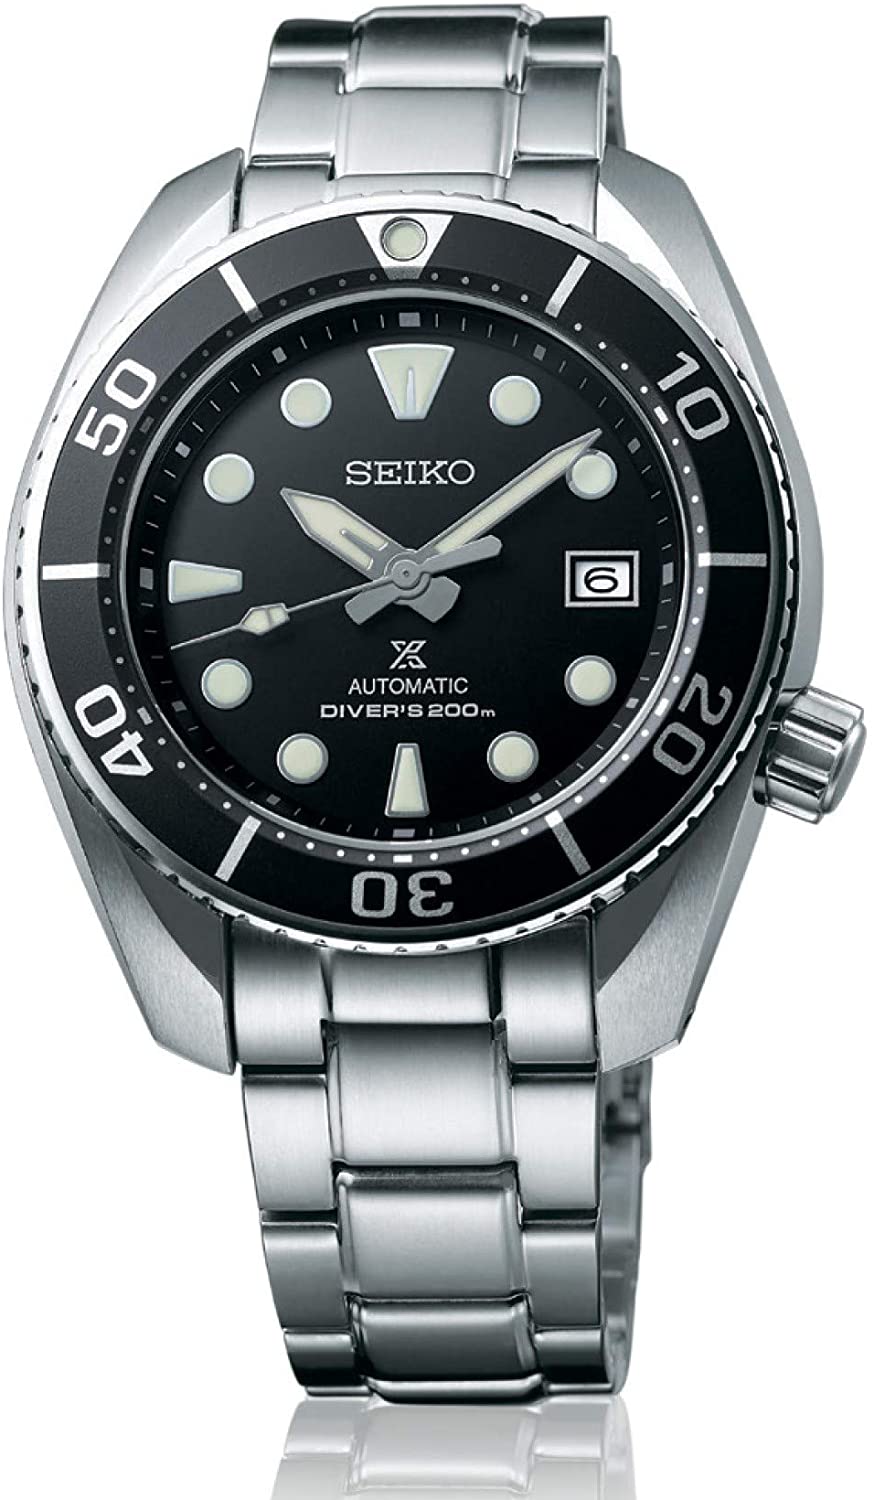 Seiko Prospex Sumo SPB101J1 Automatic Watch Review - Millenary Watches